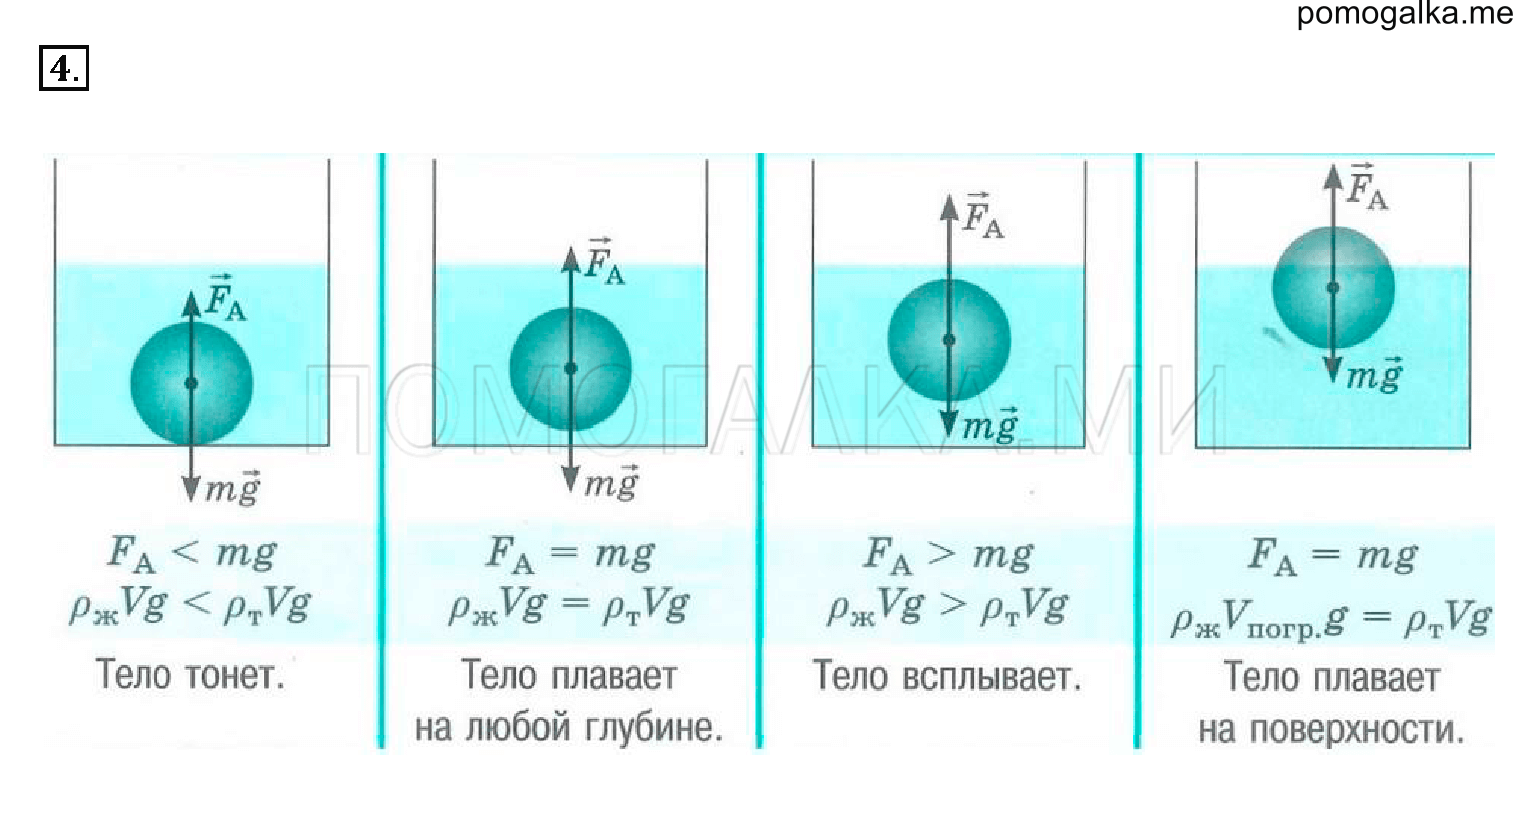 Самостоятельная работа по физике плавание тел. Плавание тел физика 7 класс формулы. Сила Архимеда условия плавания тел. Формула условие плавания тел 7 класс по физике. Условия плавания тел физика 7 класс формула.